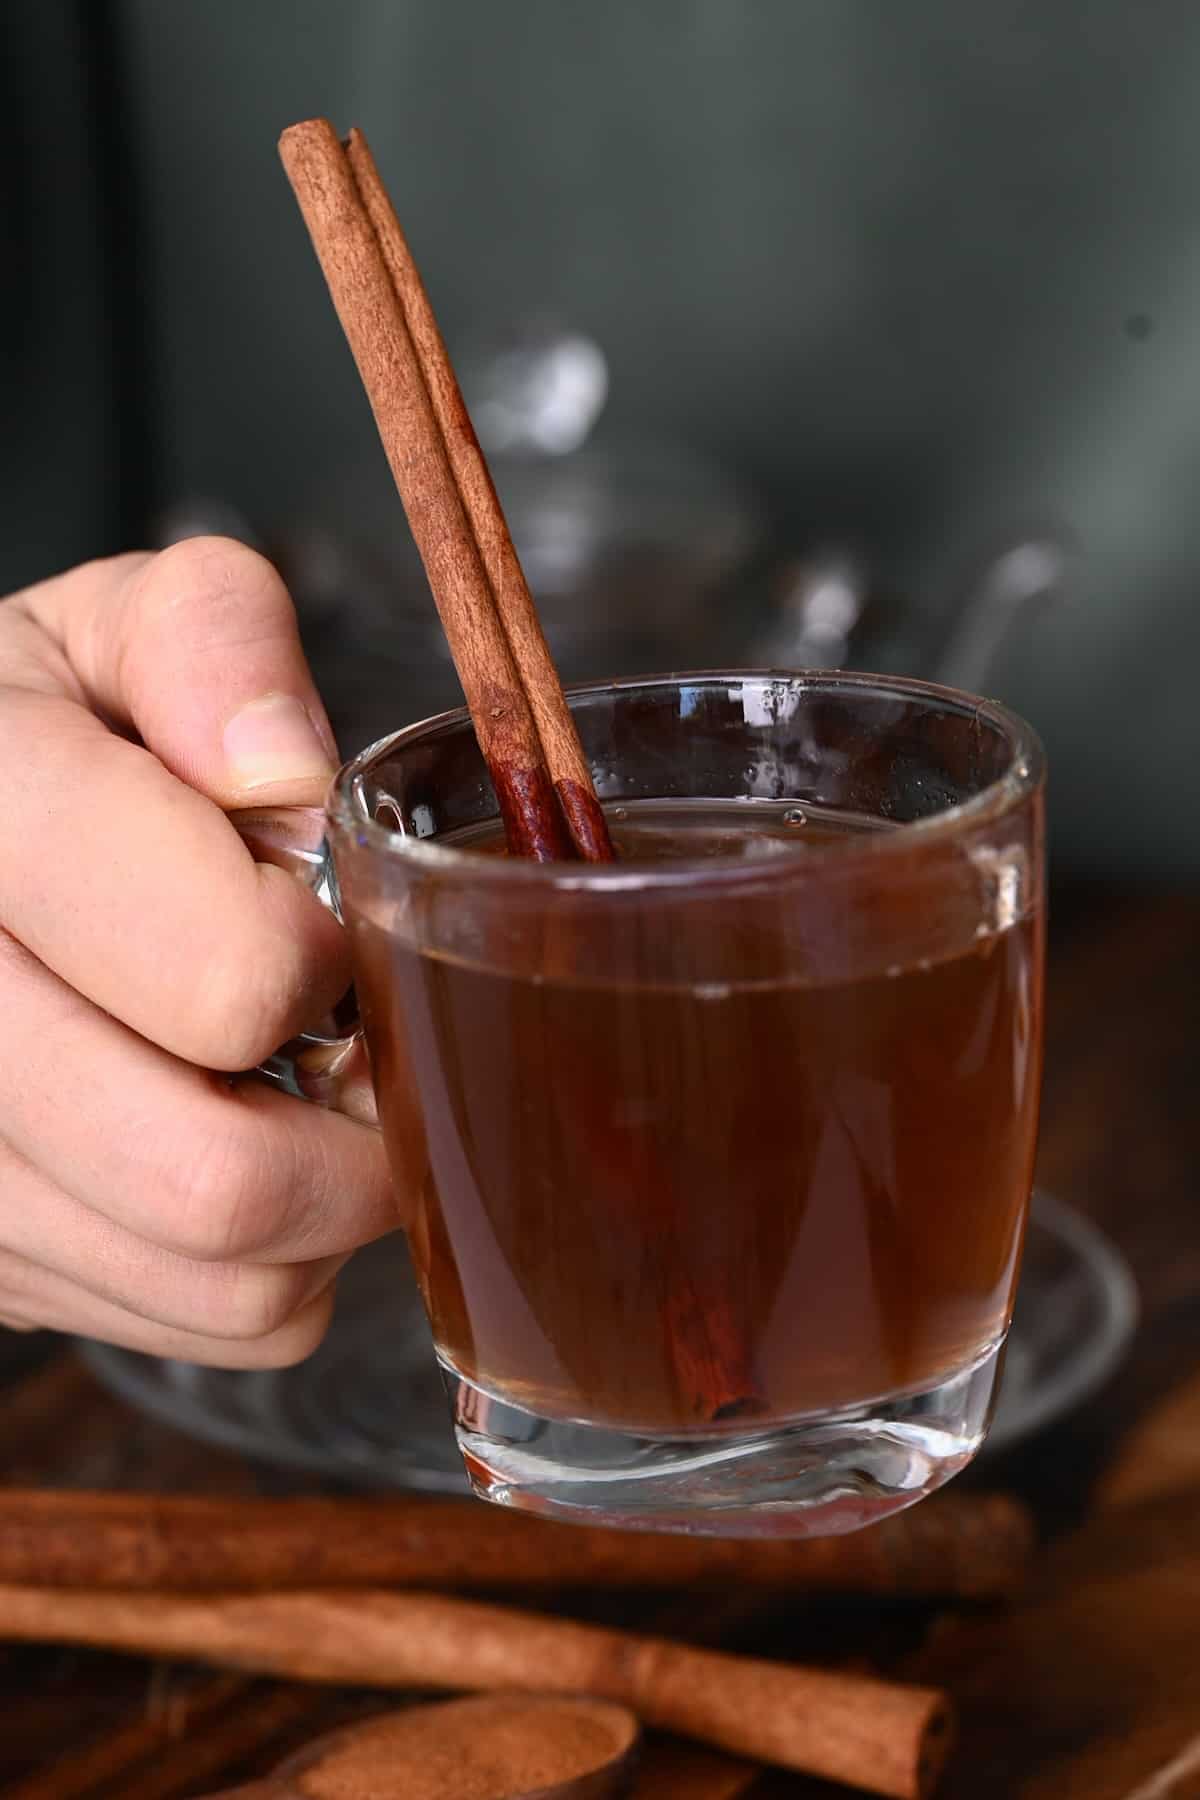 A glass with tea and a cinnamon stick